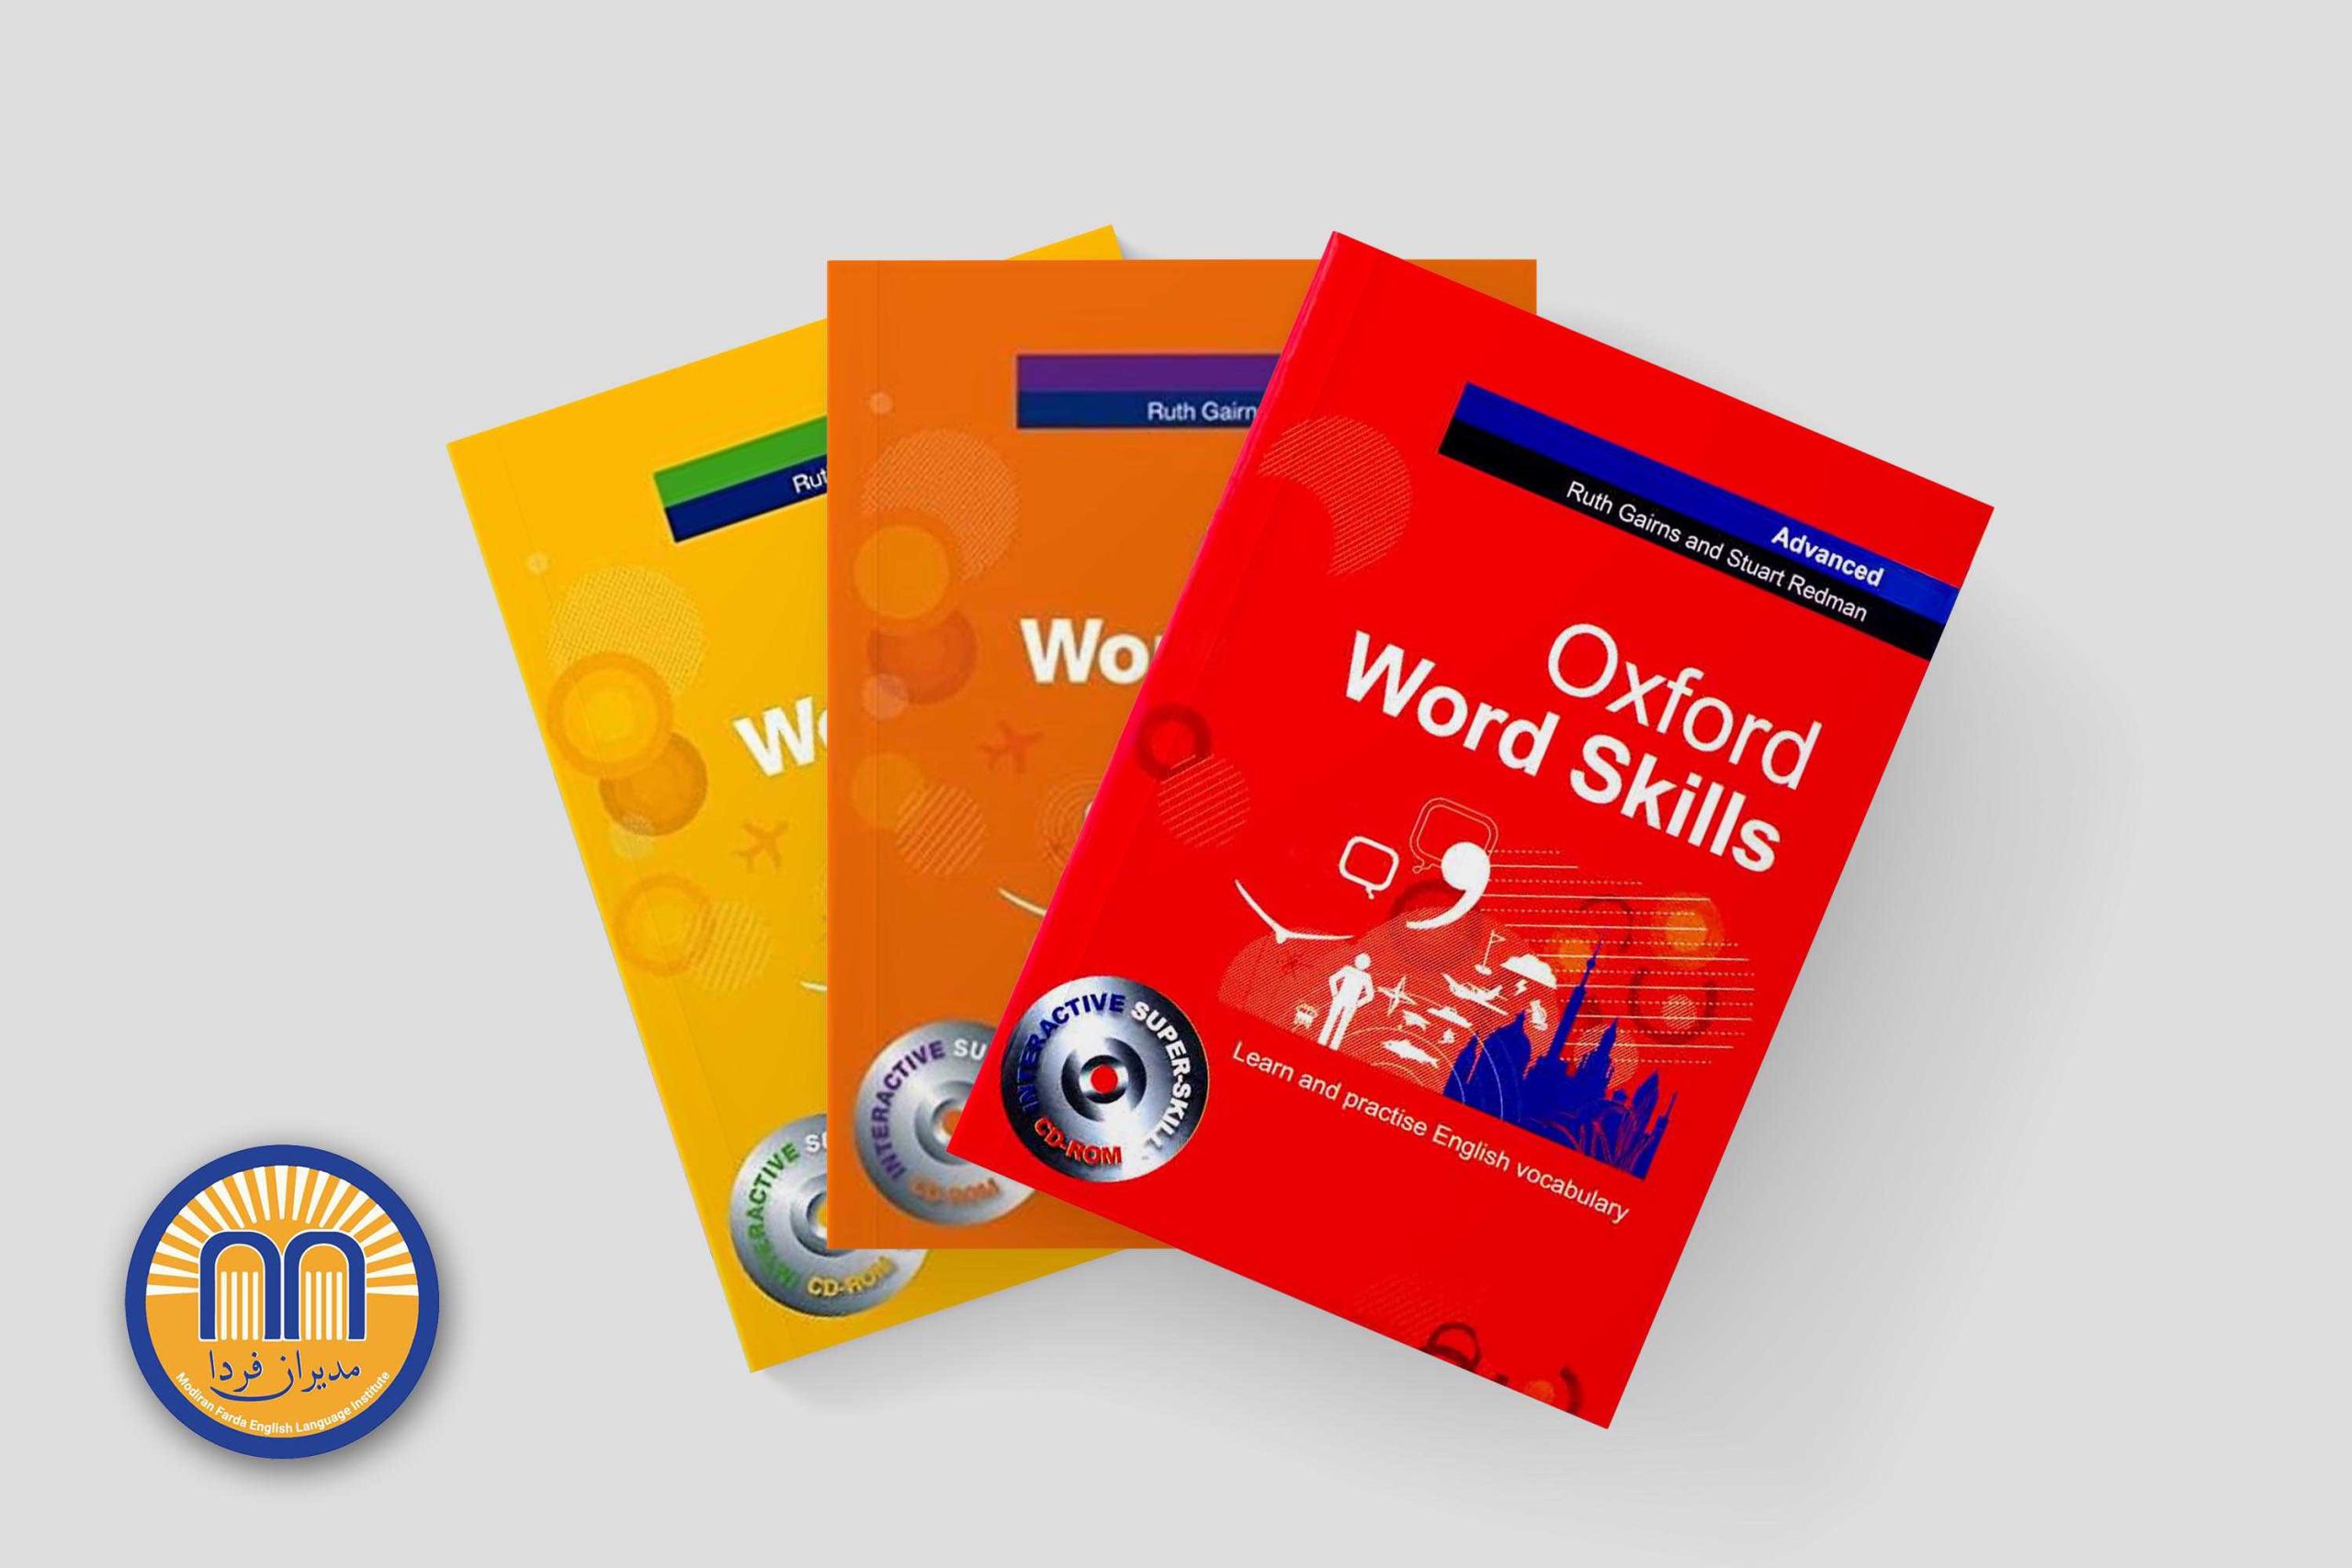 Oxford word skills pdf & audios